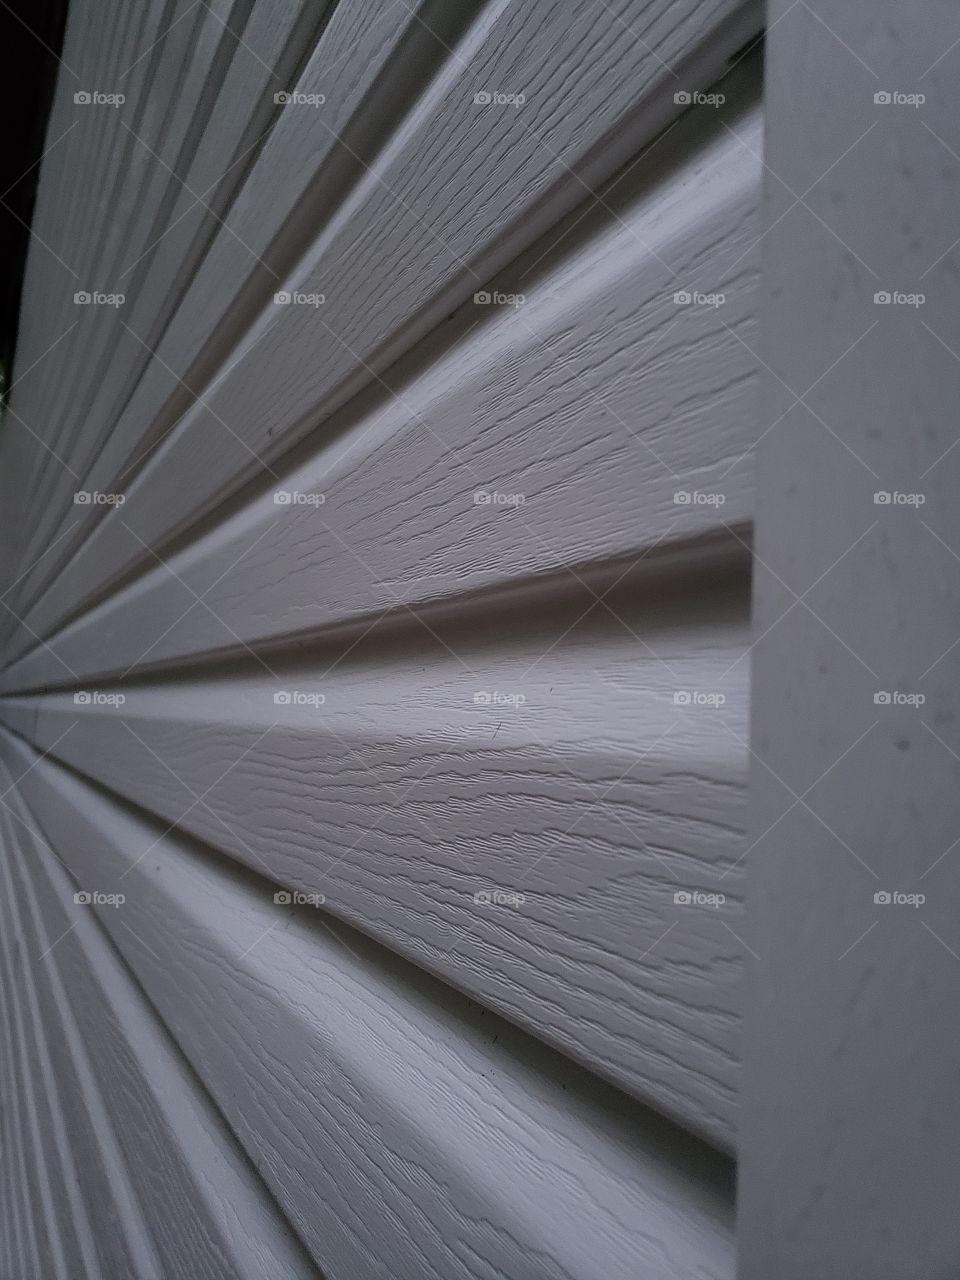 texture siding close up geometrical shape